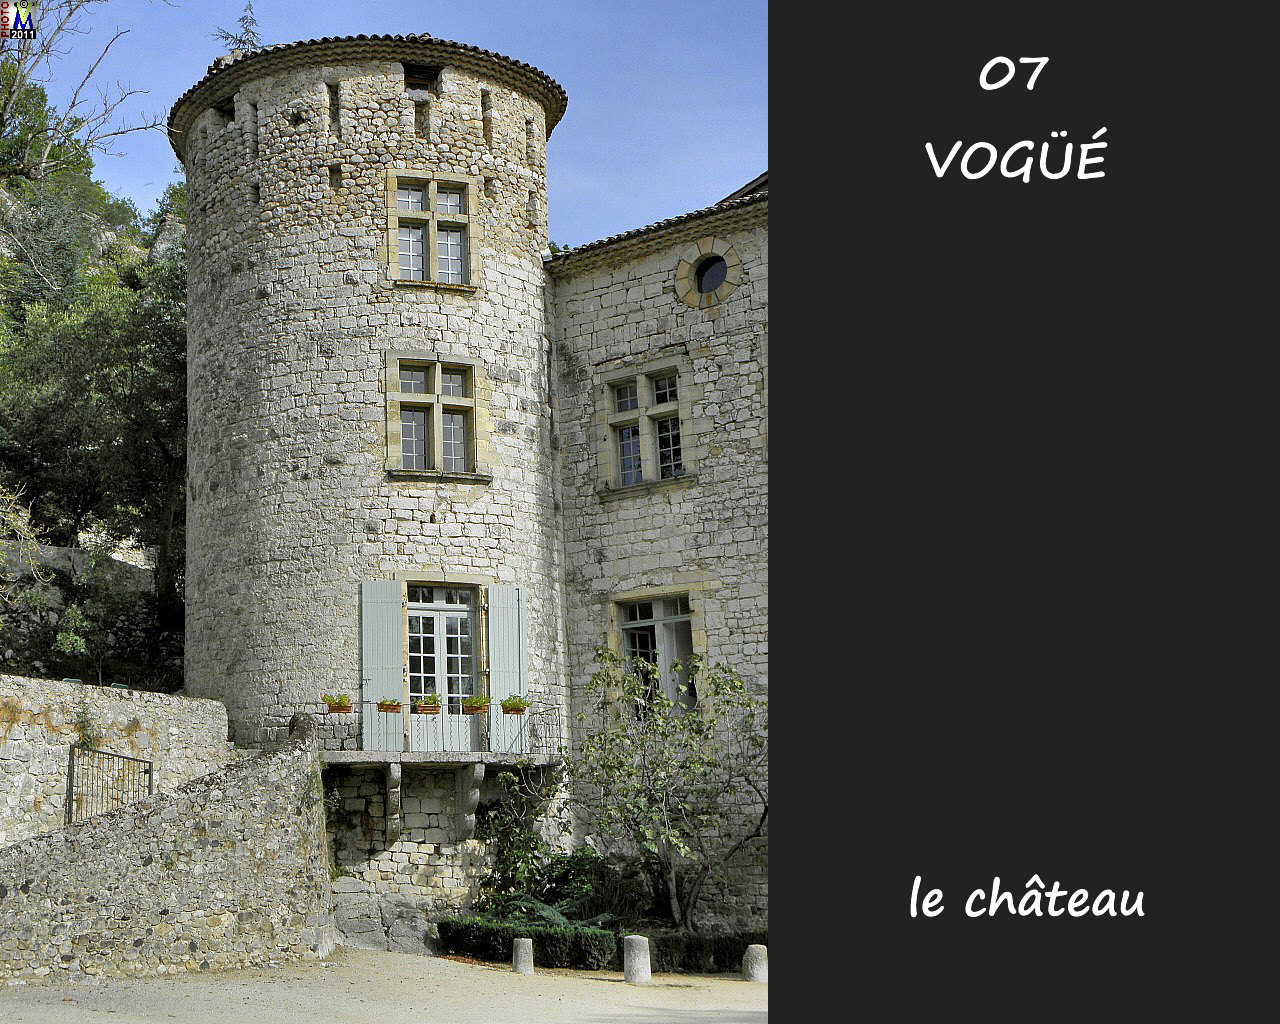 07VOGUE_chateau_120.jpg